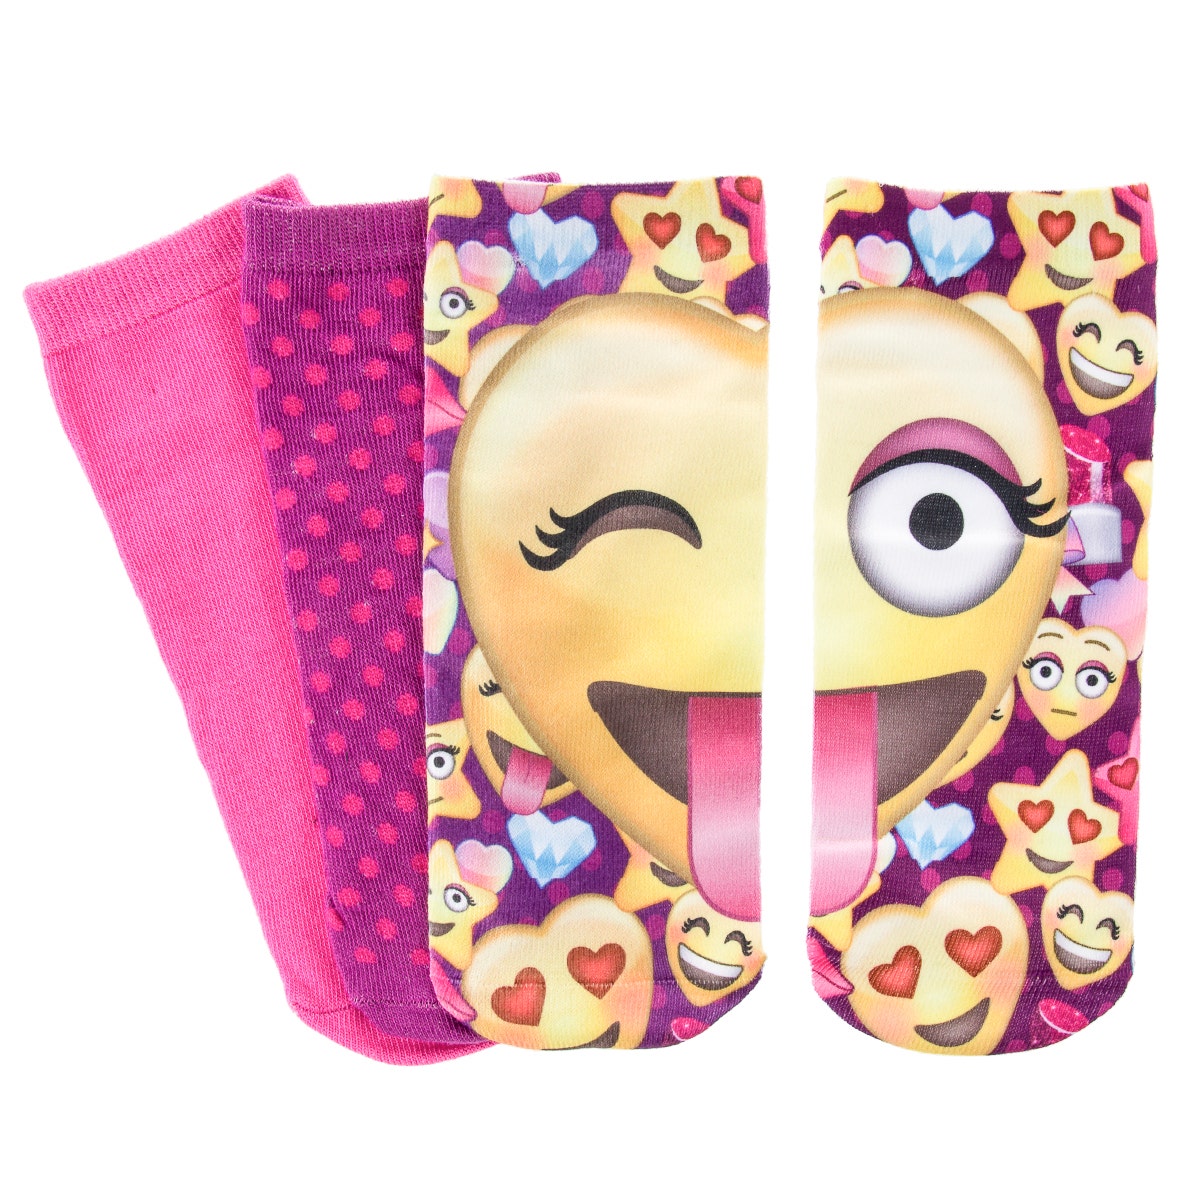 3 Pairs Women’s Ankle Socks By Fashion Angels – Emojis & Fun!